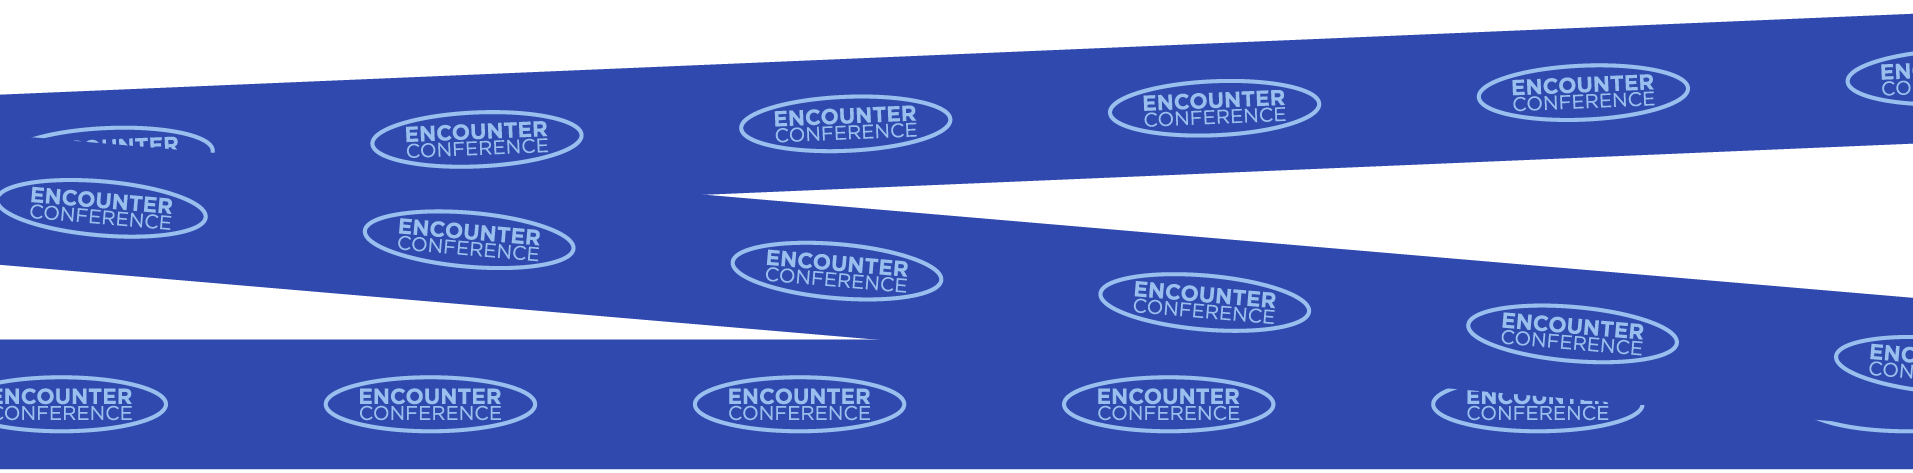 Encounter Conference decorative banner